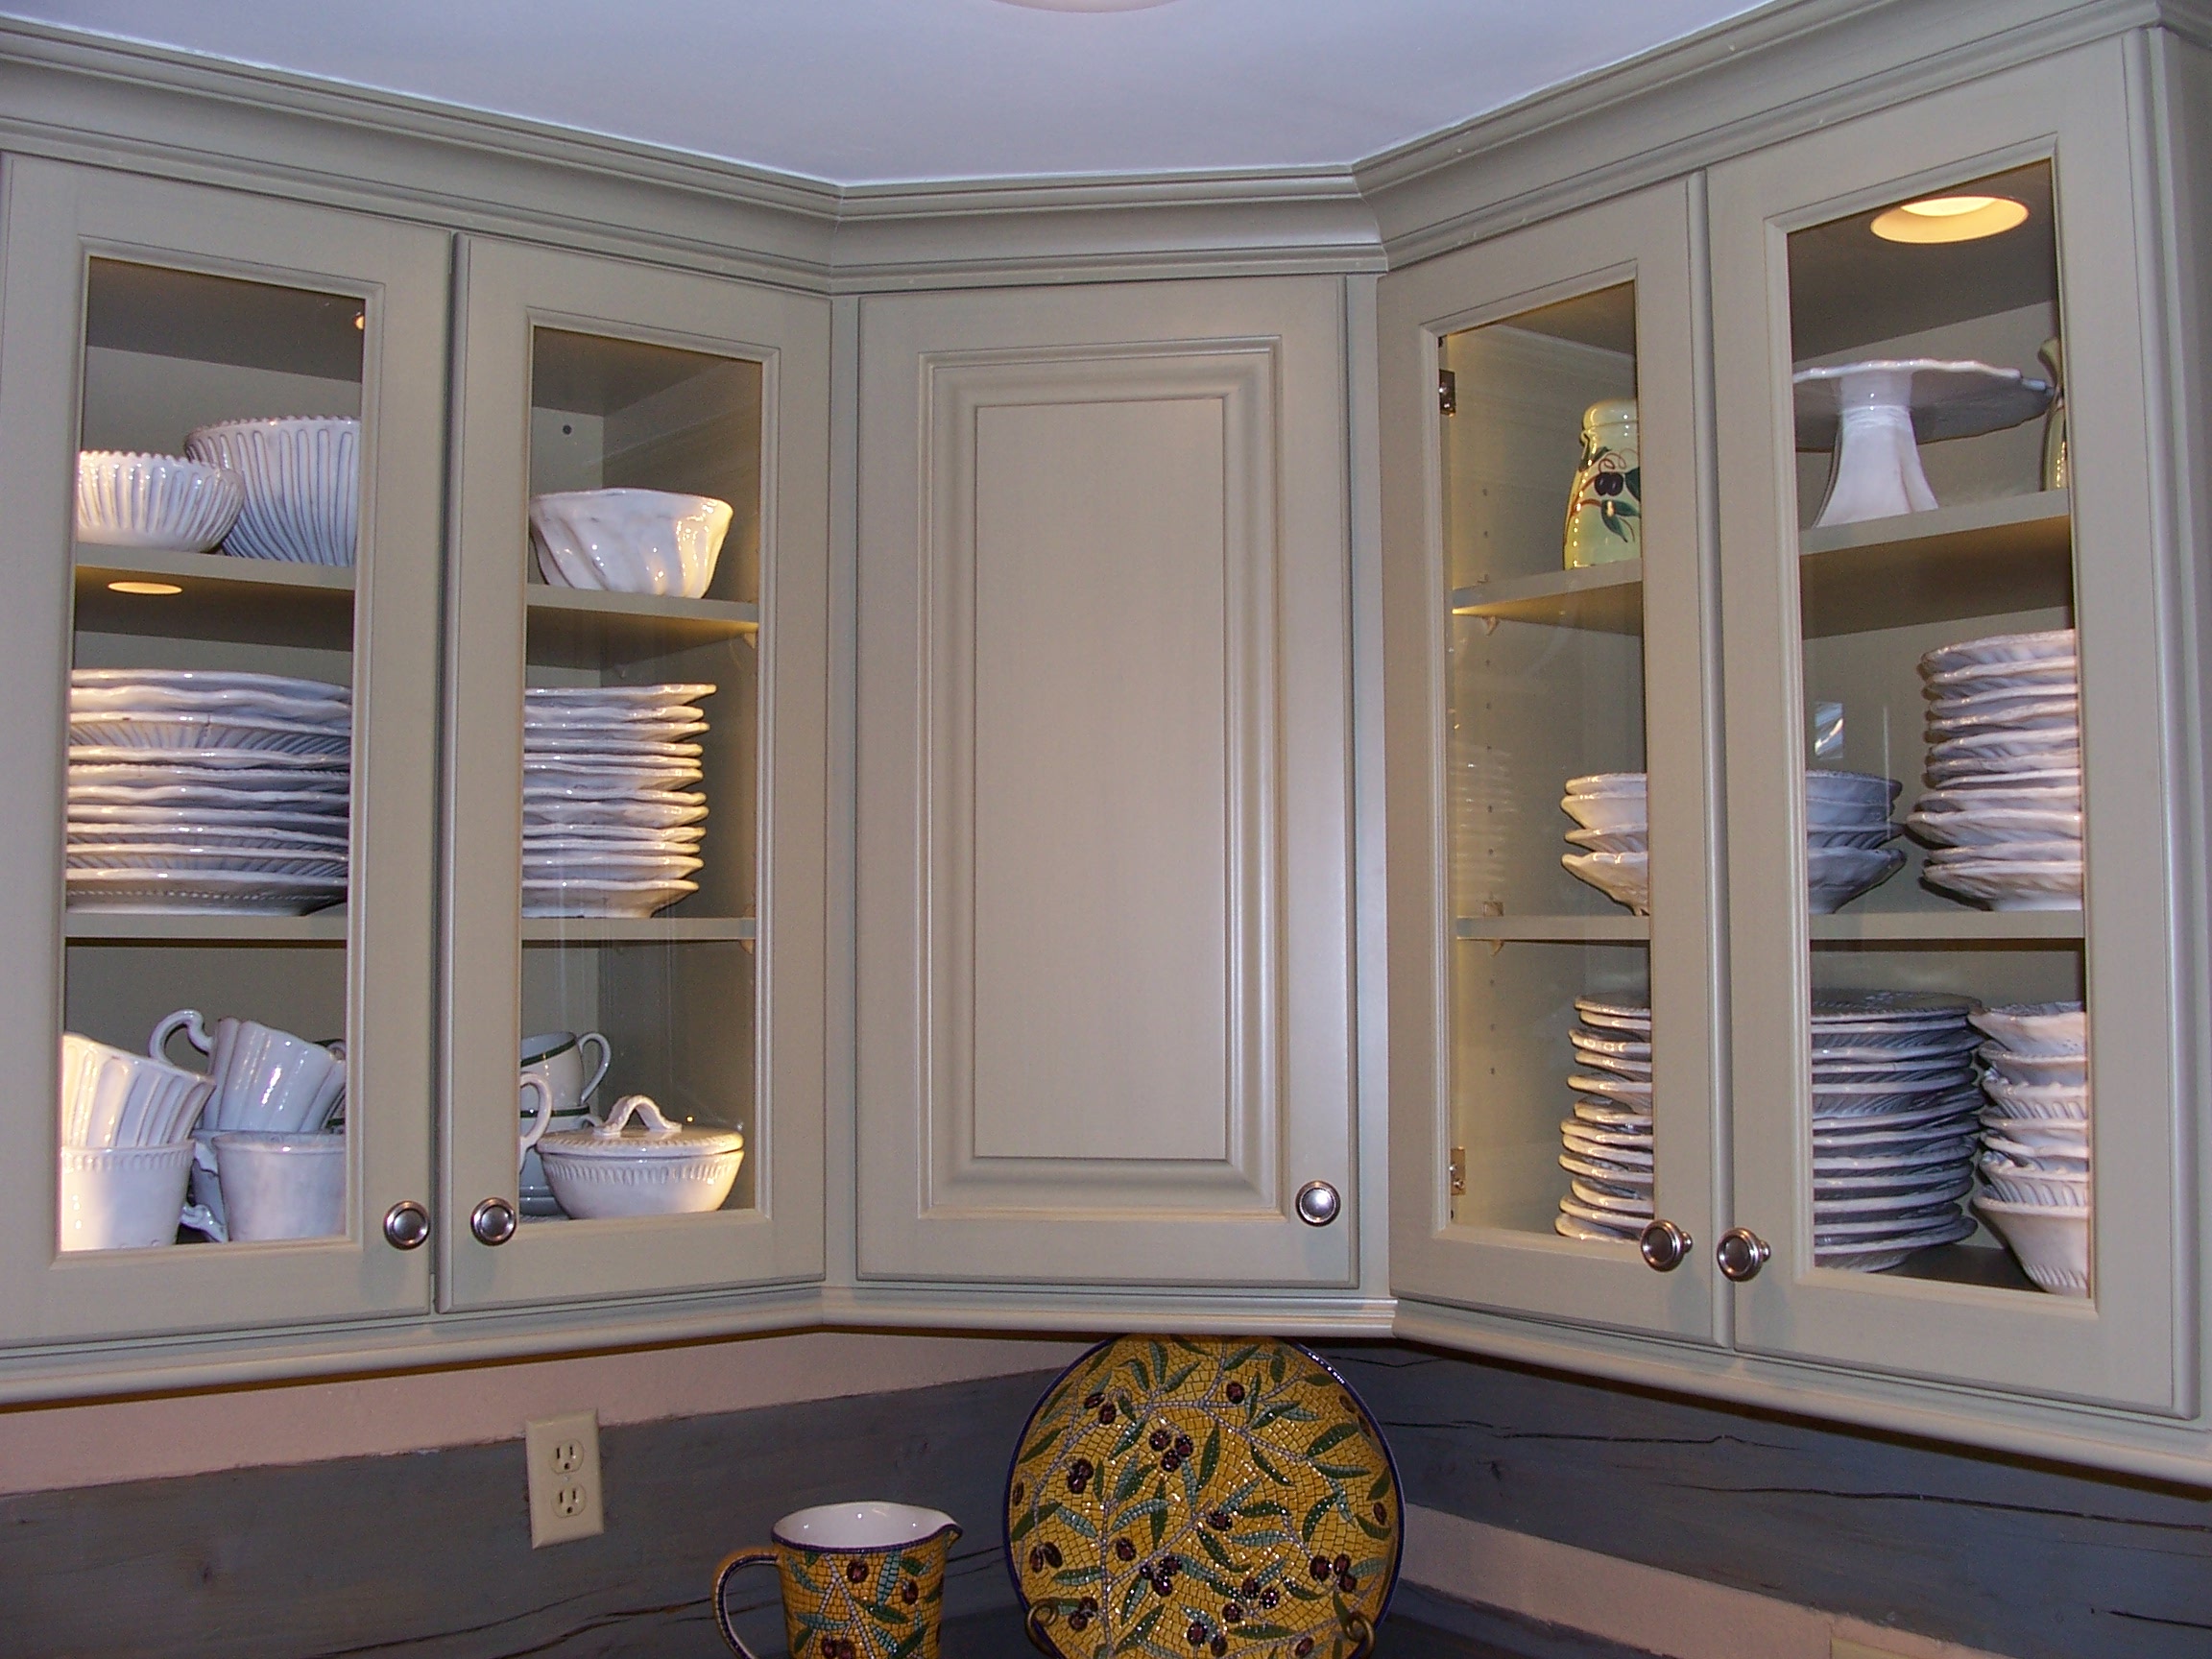 Kitchen Furniture Stunning Look Of White Cabinets Glass Doors Kitchen